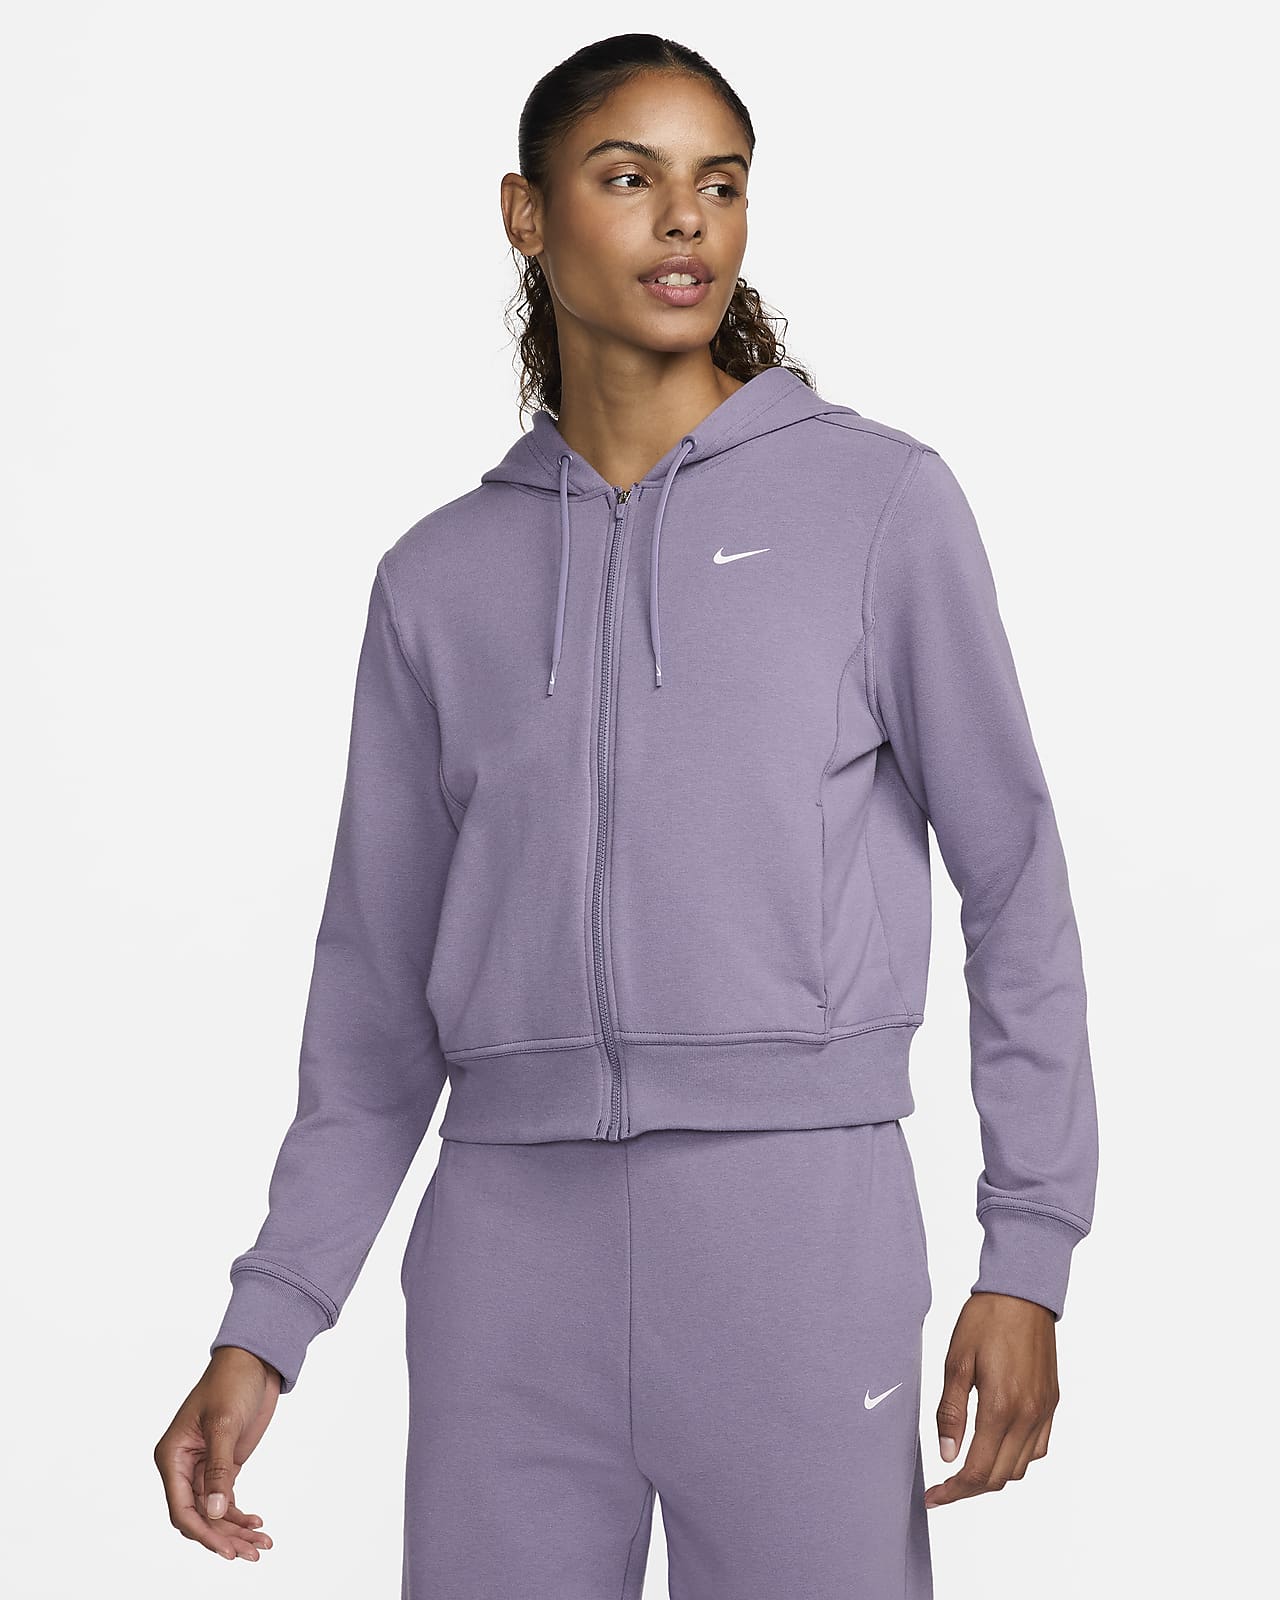 Nike Dri-FIT One Women's Full-Zip French Terry Hoodie.